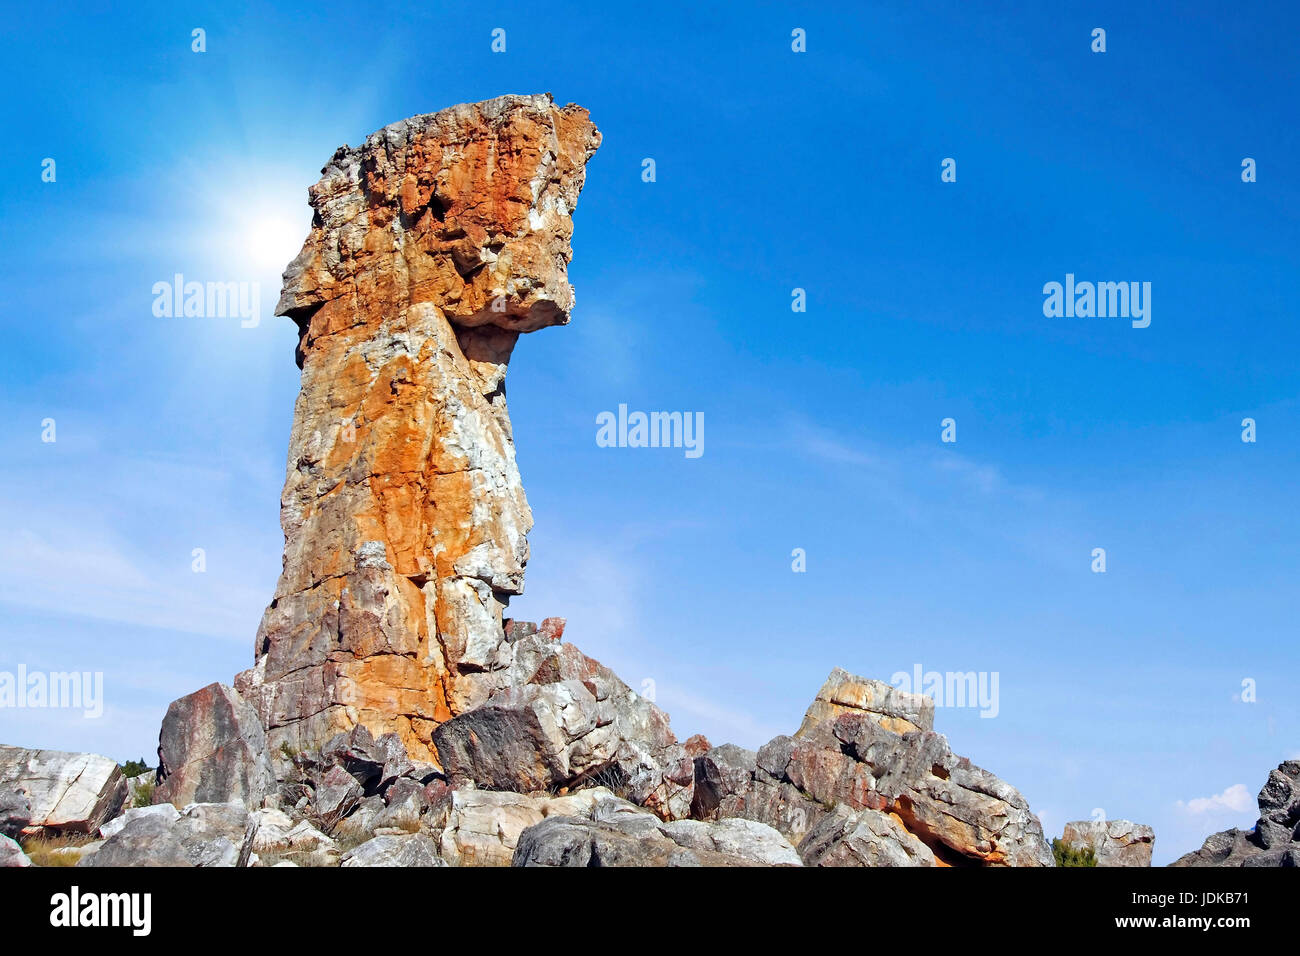 Maltese crosses Hike, rock formations, Africa, mountain Ceder, Maltese Cross Hike, Felsformationen, Afrika, Cederberg Stock Photo